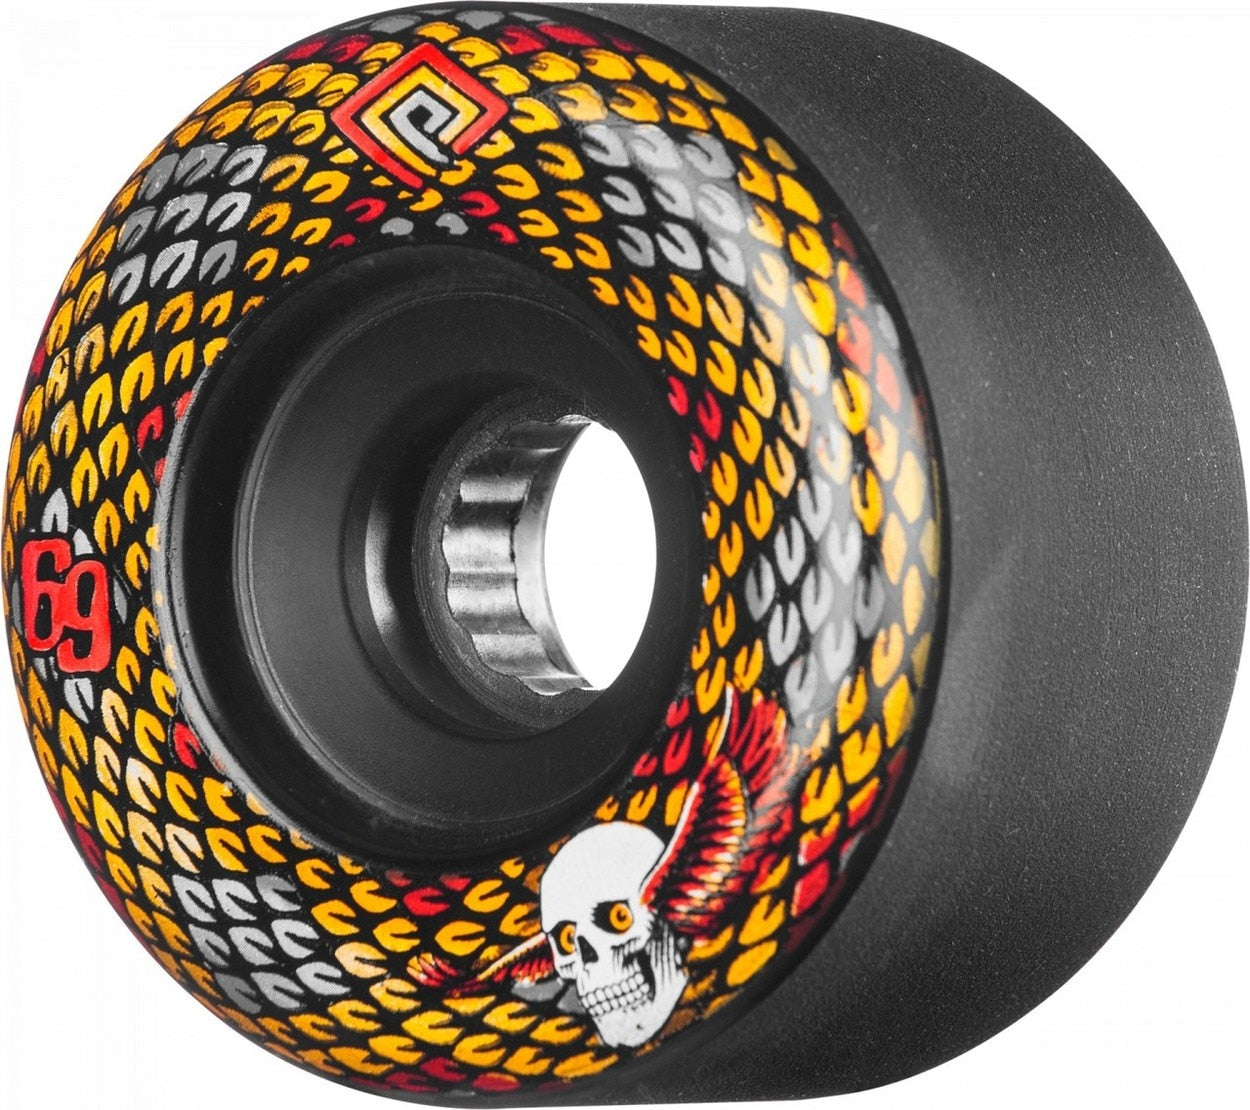 Powell Peralta Snakes  75a Skateboard Wheels - Black